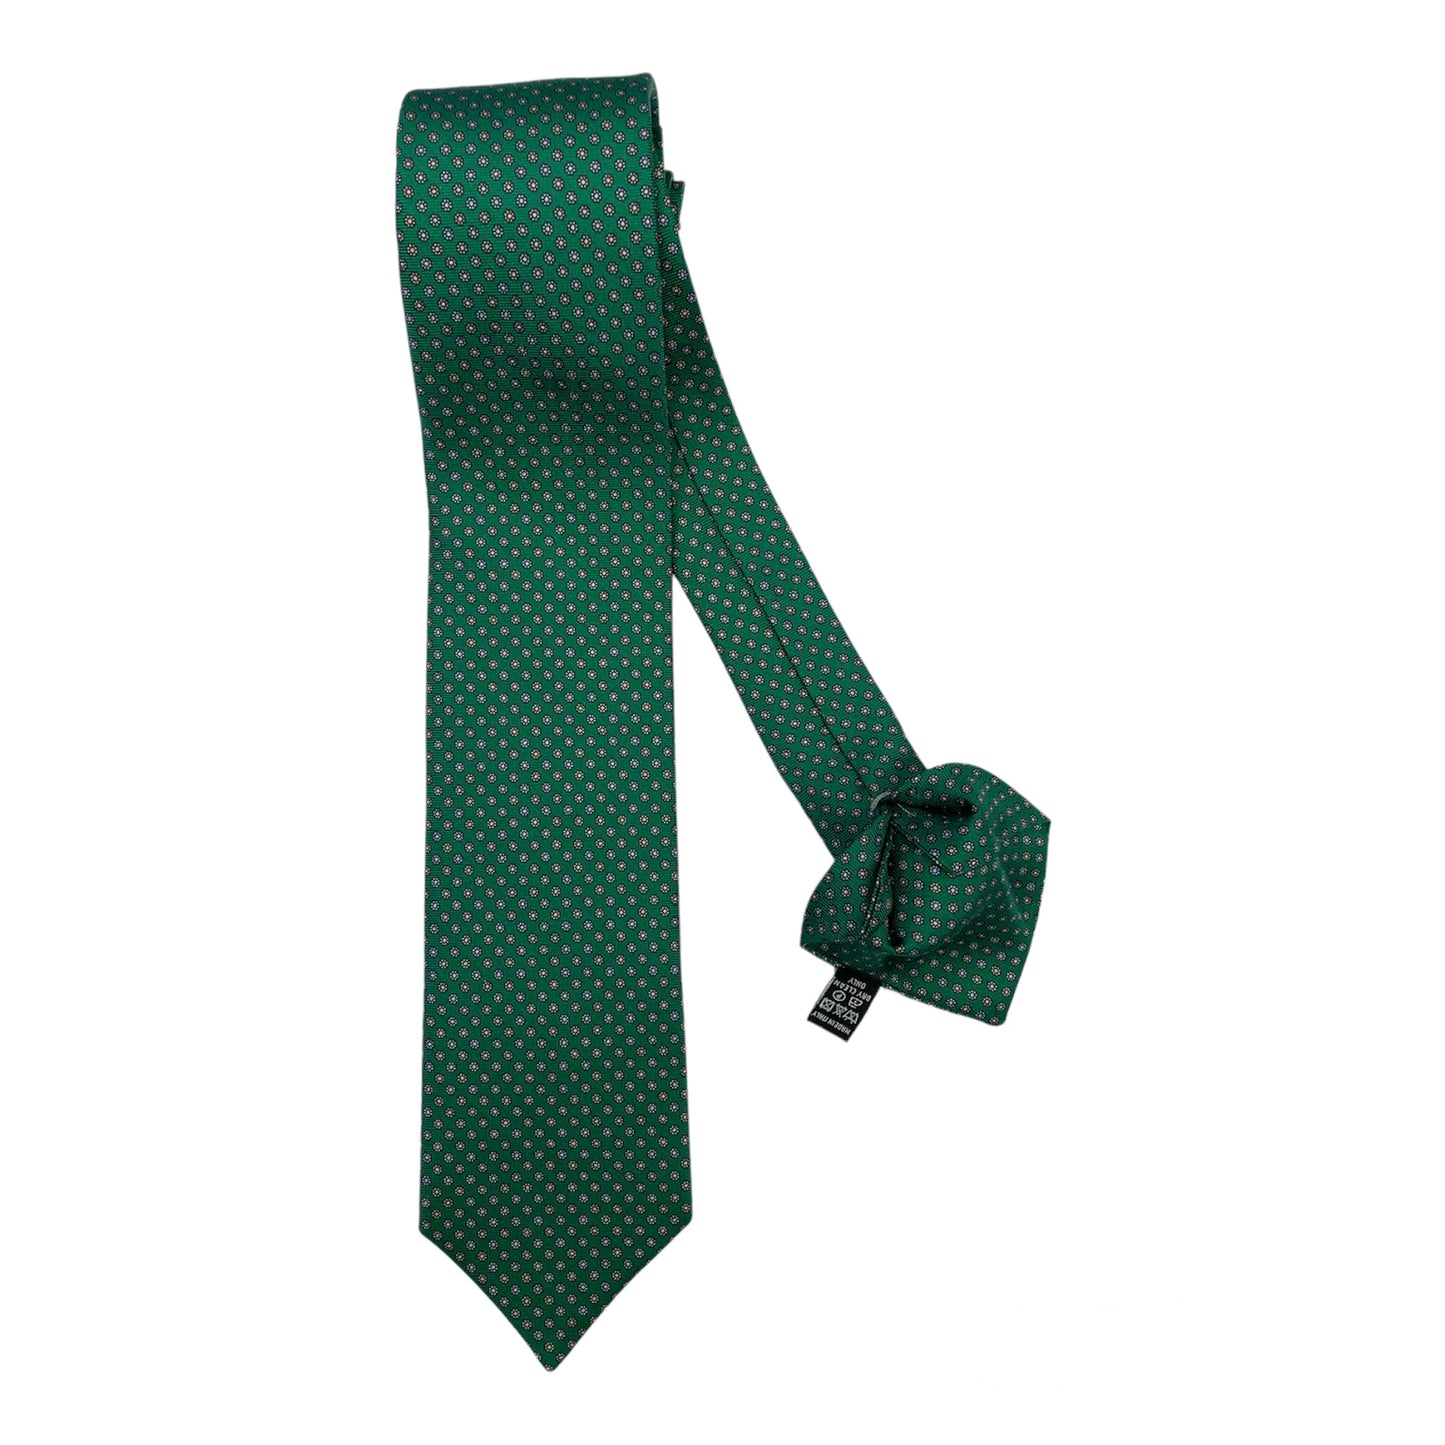 Green silk tie with light flowers